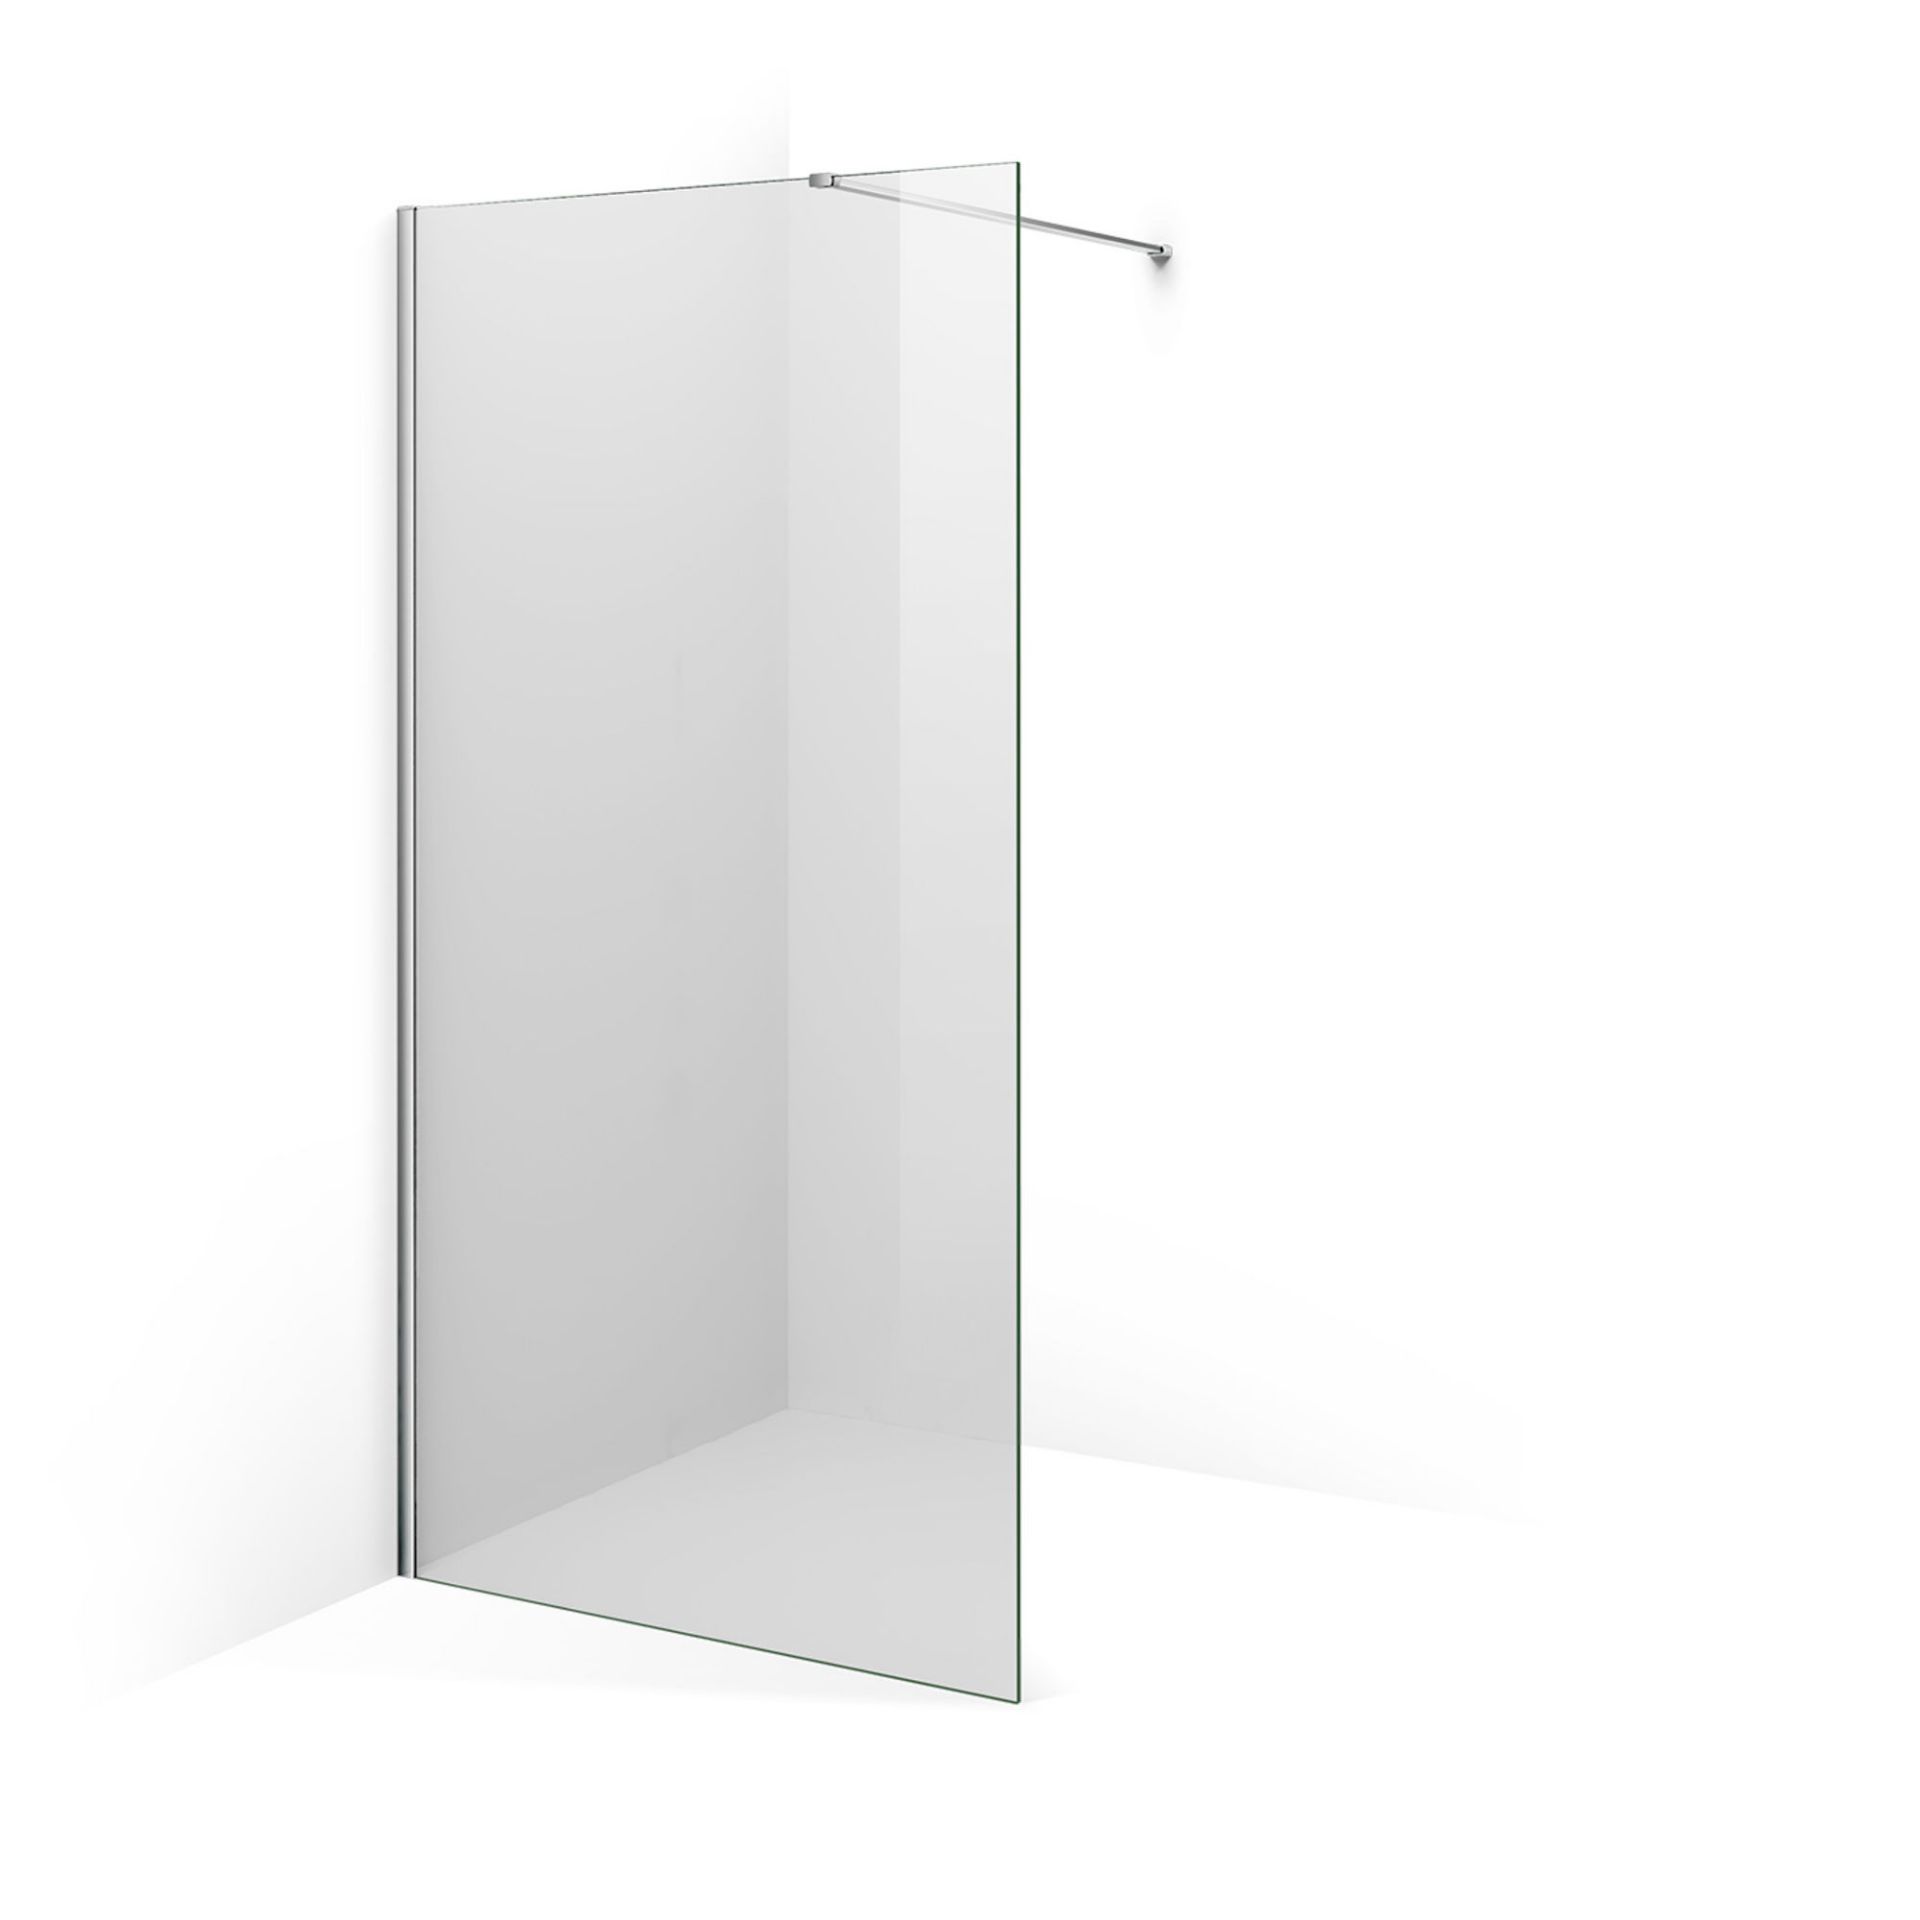 New (S19) 1000 mm - 10 mm - Premium Frameless Easy clean Wet room Panel. RRP £499.99. 10 mm British. - Image 3 of 3